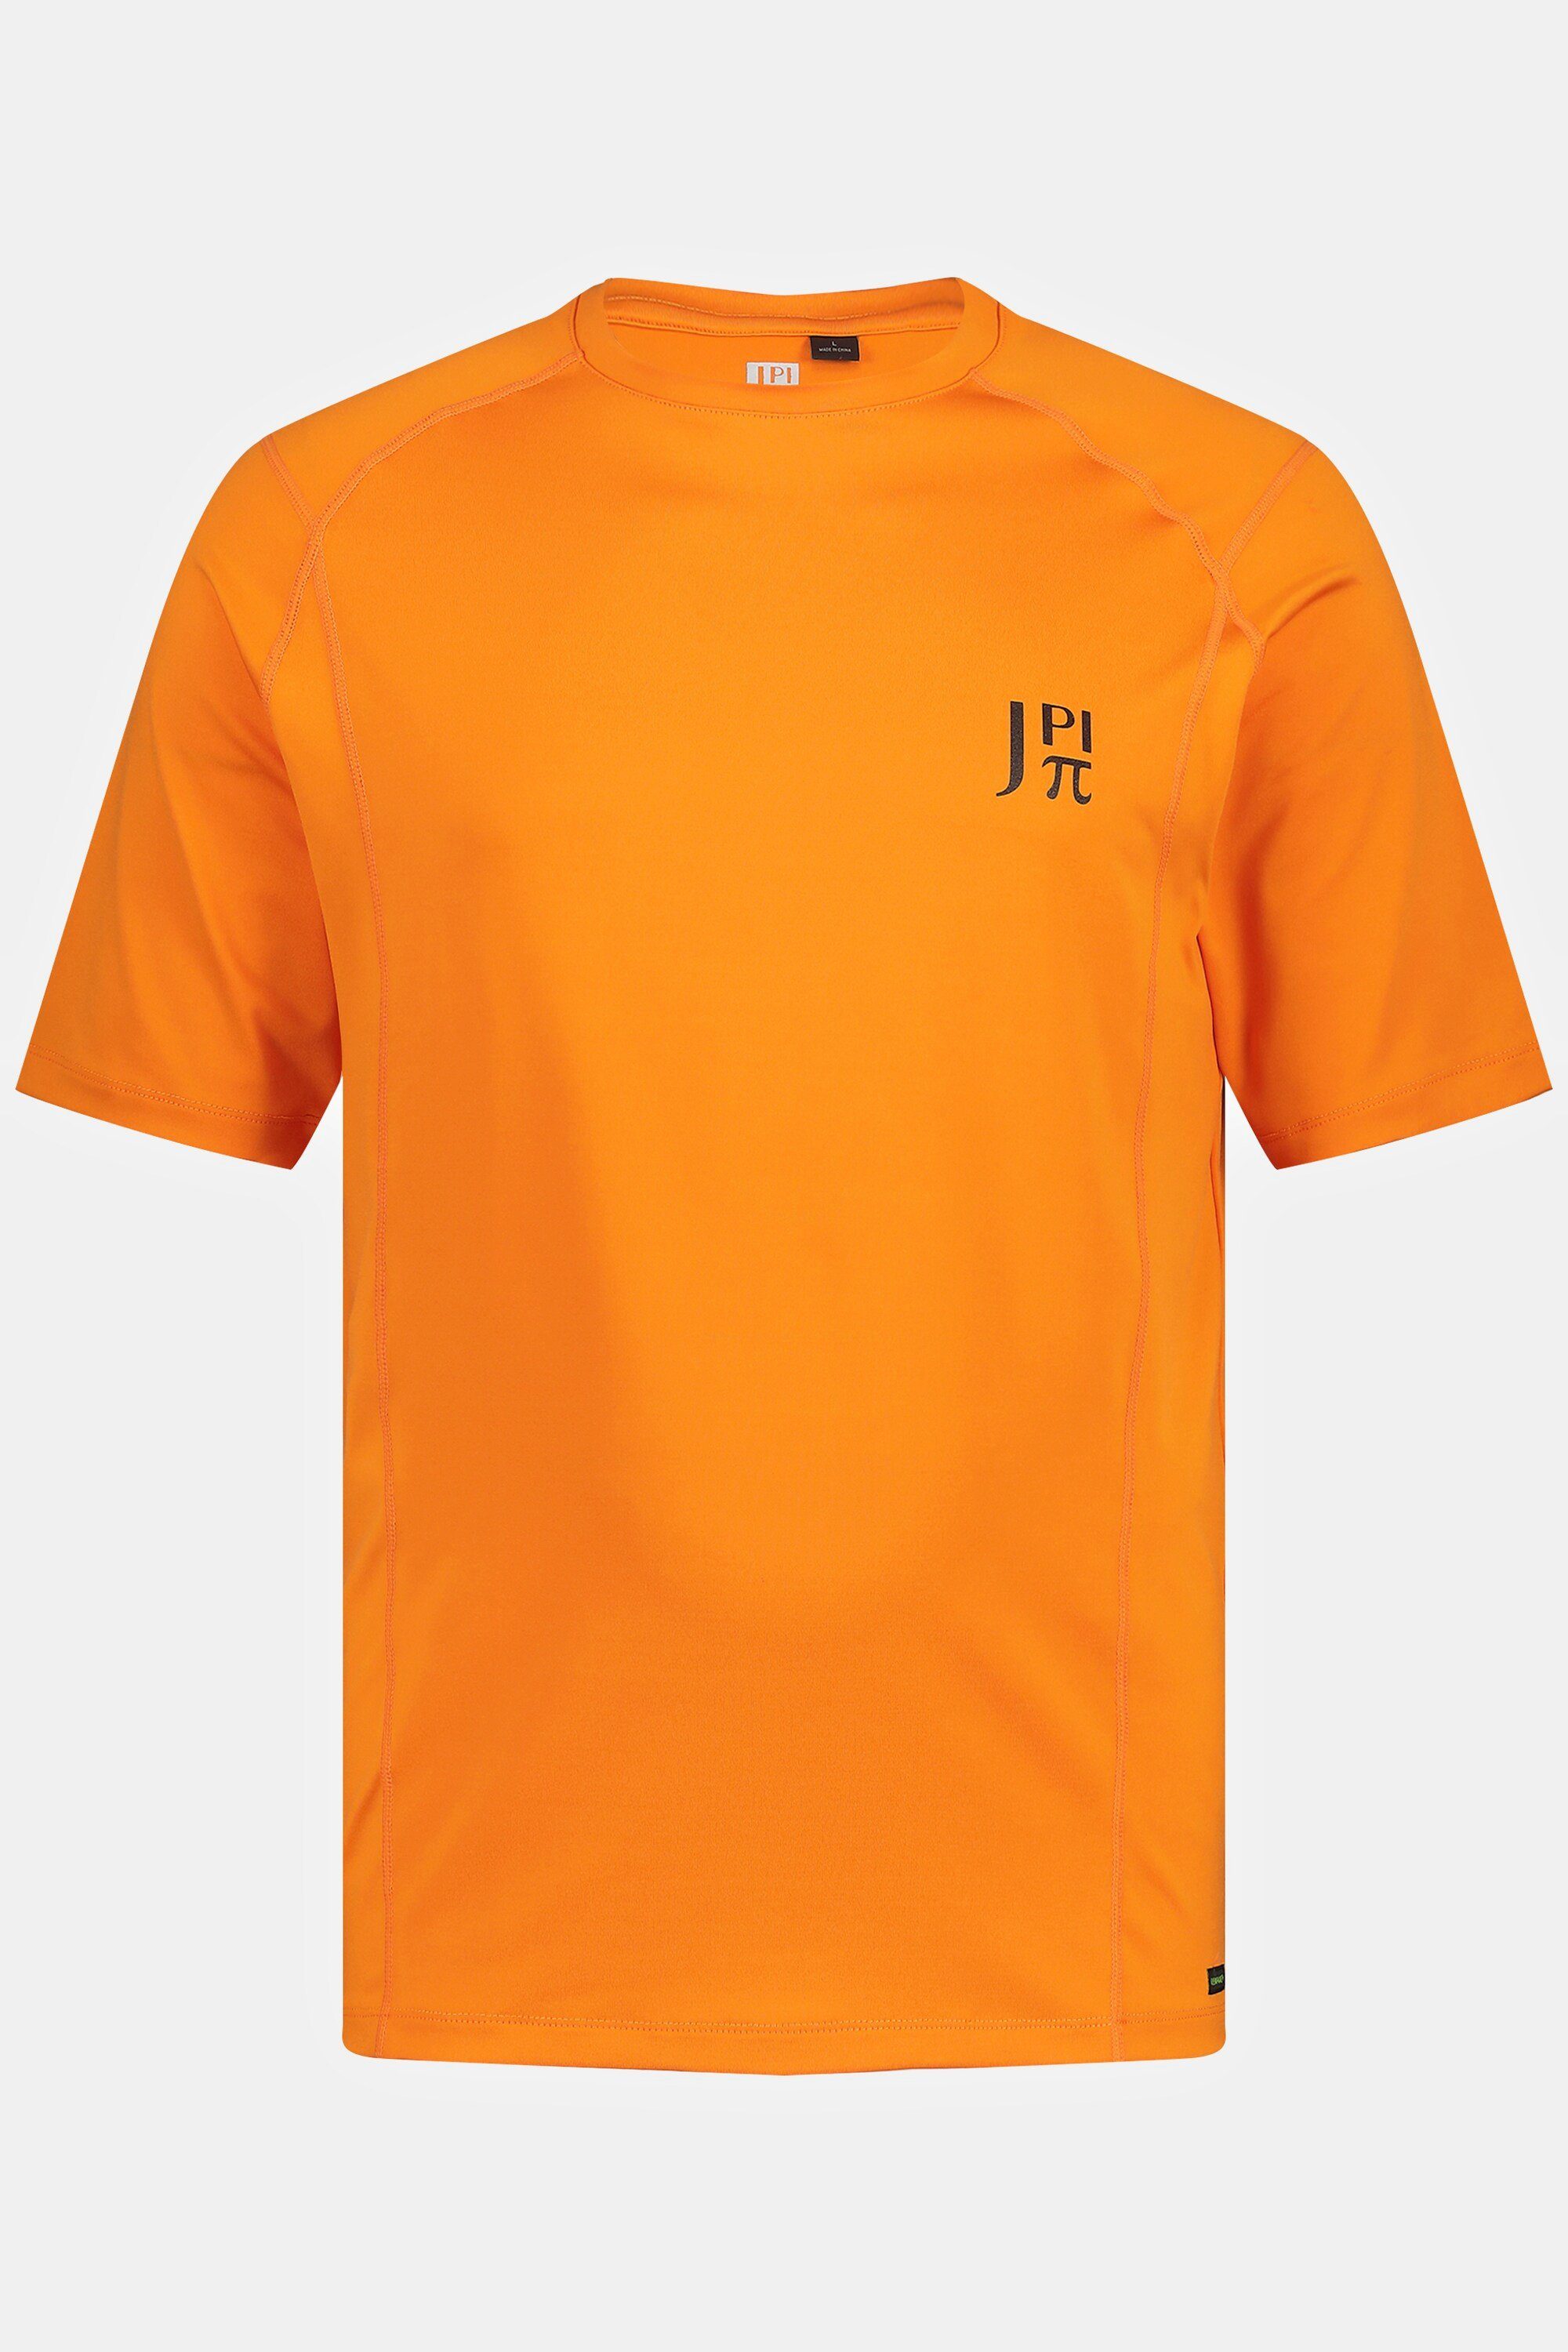 orange Halbarm JP1880 FLEXNAMIC® Fitness T-Shirt Funktions-Shirt